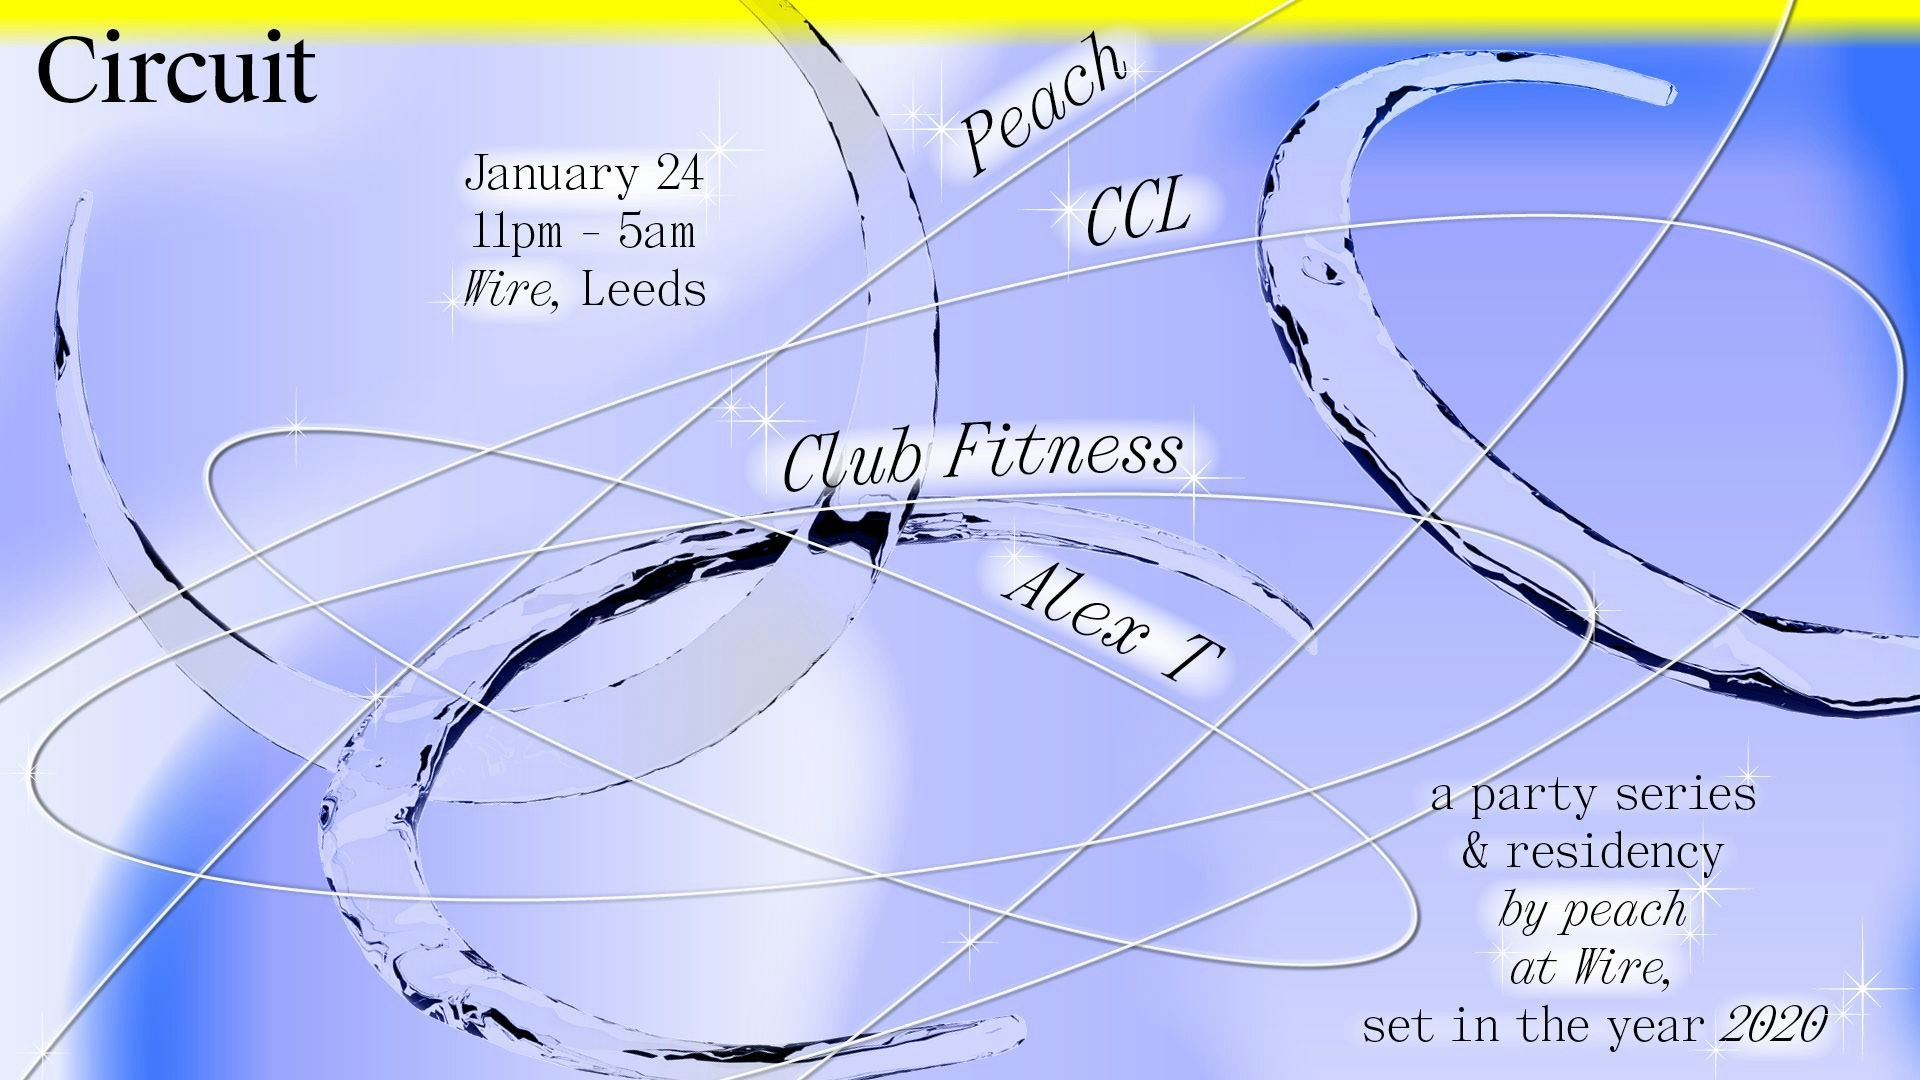 Circuit: Peach, CCL, Club Fitness & Alex T